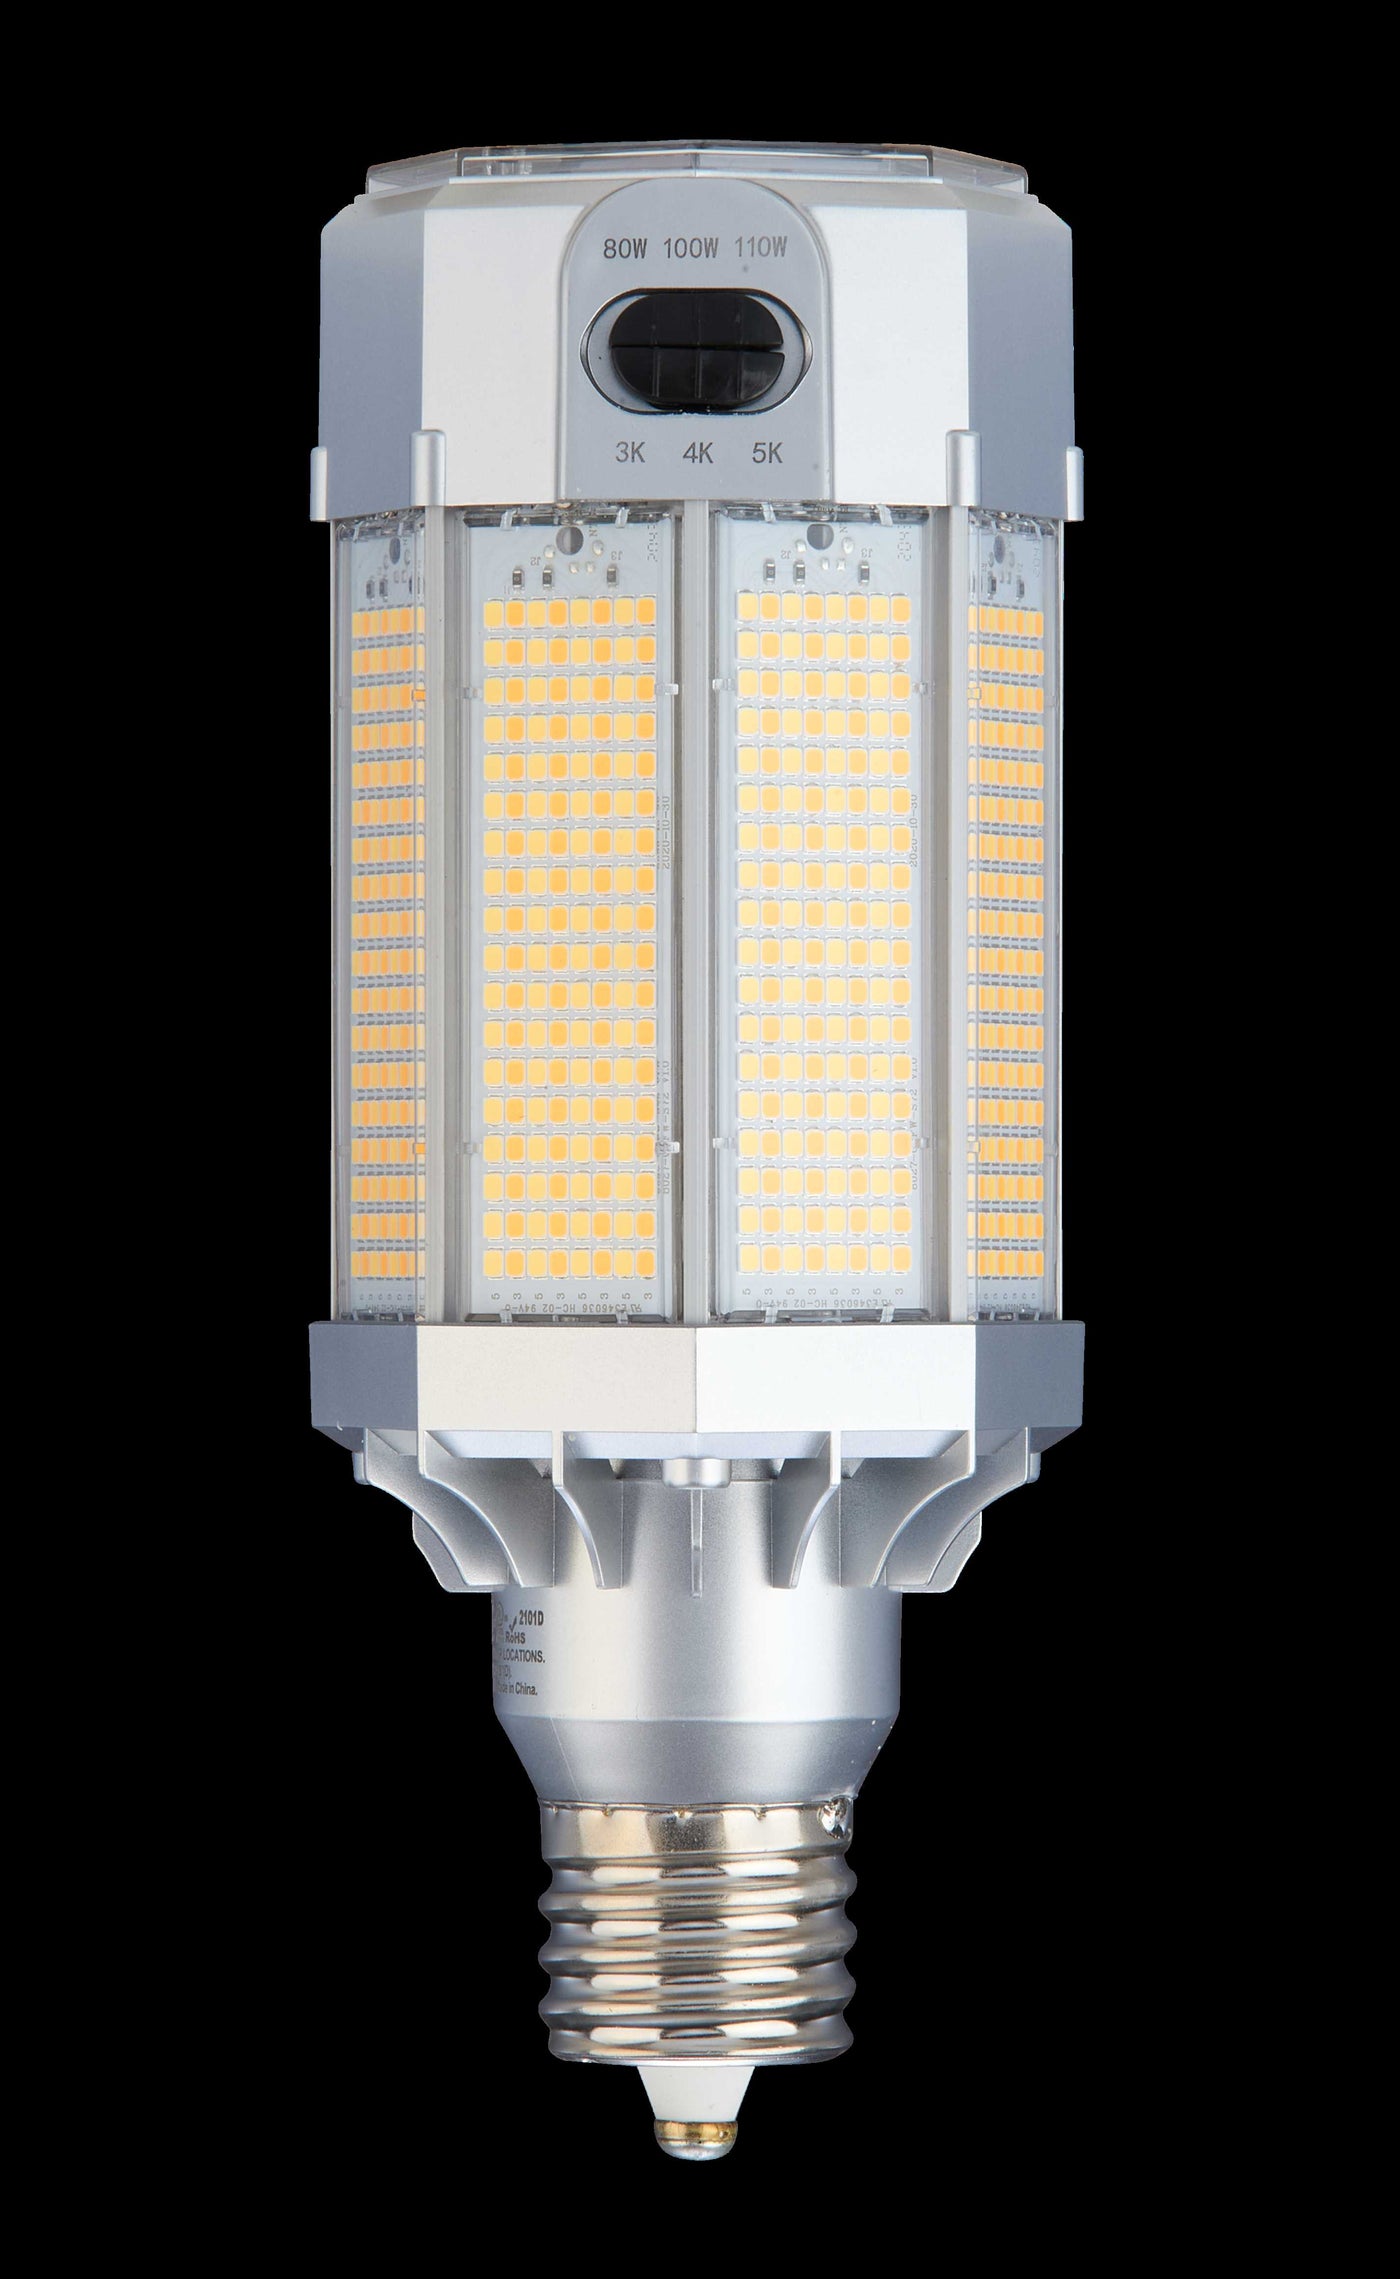 LED Superflex Bollard/Post Light, 15,730 Lumens 80W/100W/110W selectable, 120-277V CCT Selectable 3000K/4000K/5000K